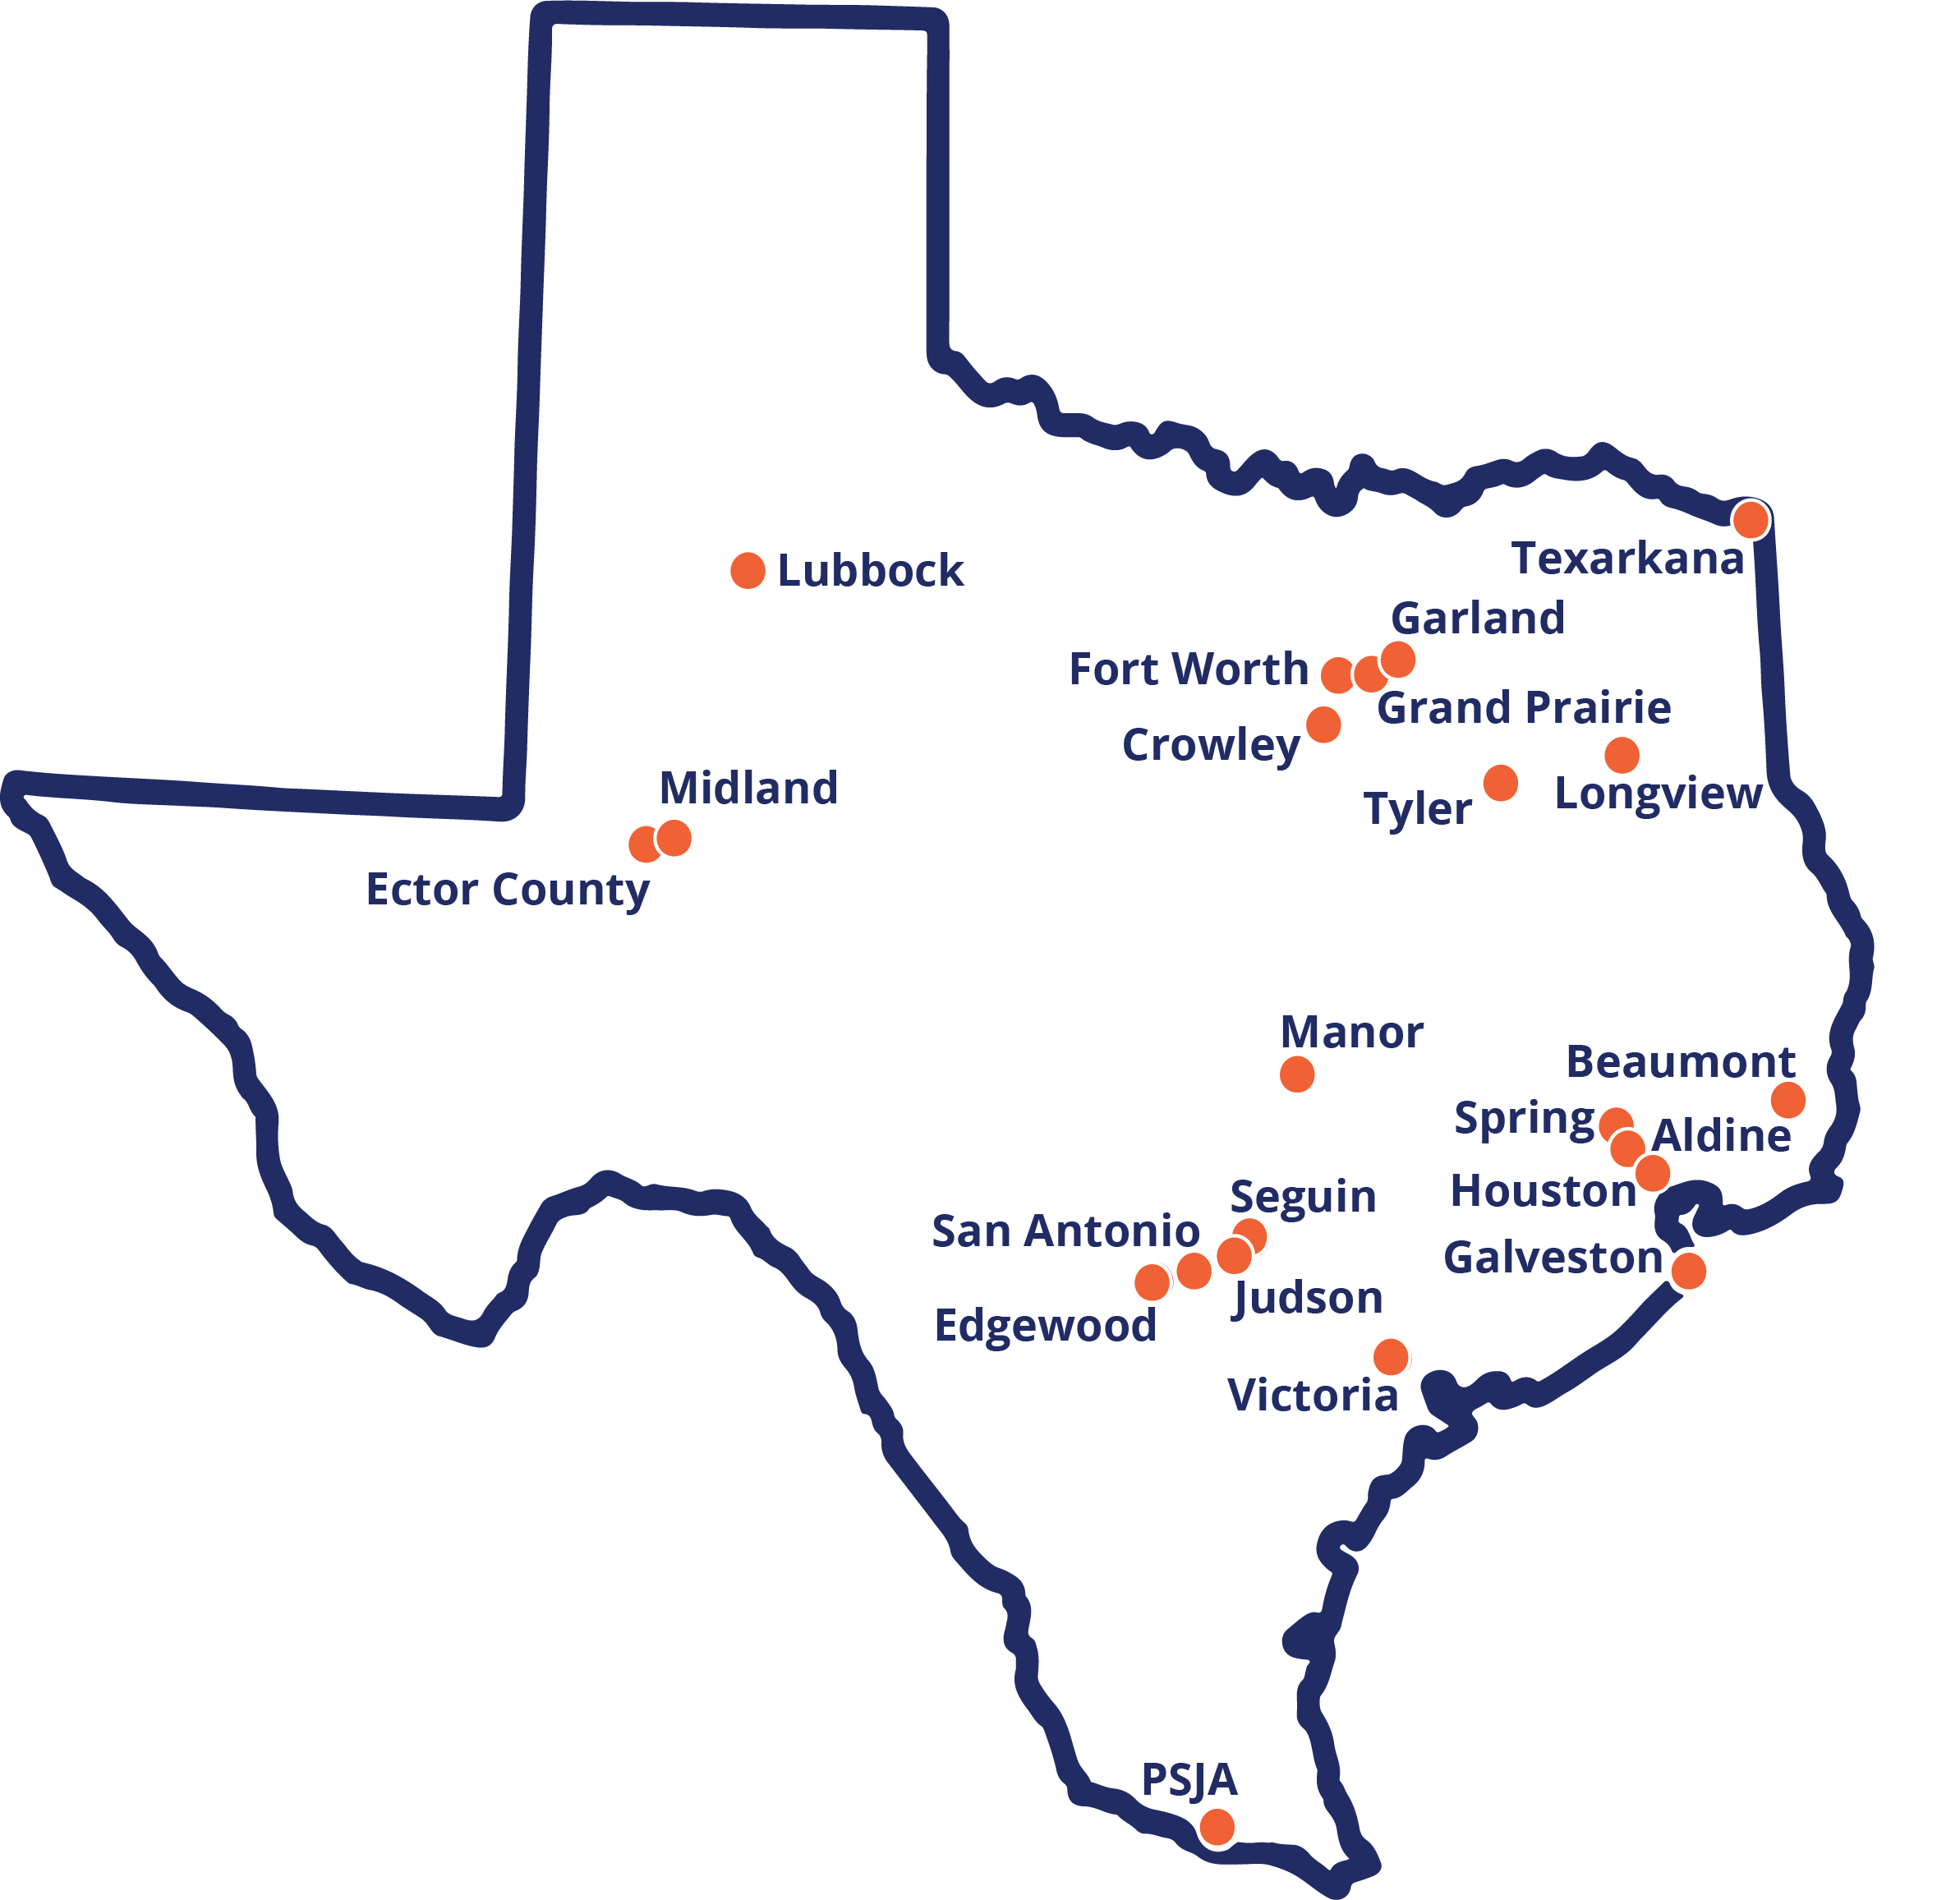 Map of Texas with 22 SGS Districts represented including: Lubbock, Midland, Ector County, Texarkana, Garland, Fort Worth, Grand Prairie, Crowley, Tyler, Longview, Manor, Beaumont, Spring, Aldine, Houston, Galveston, Seguin, San Antonio, Edgewood, Judson, Victoria, PSJA